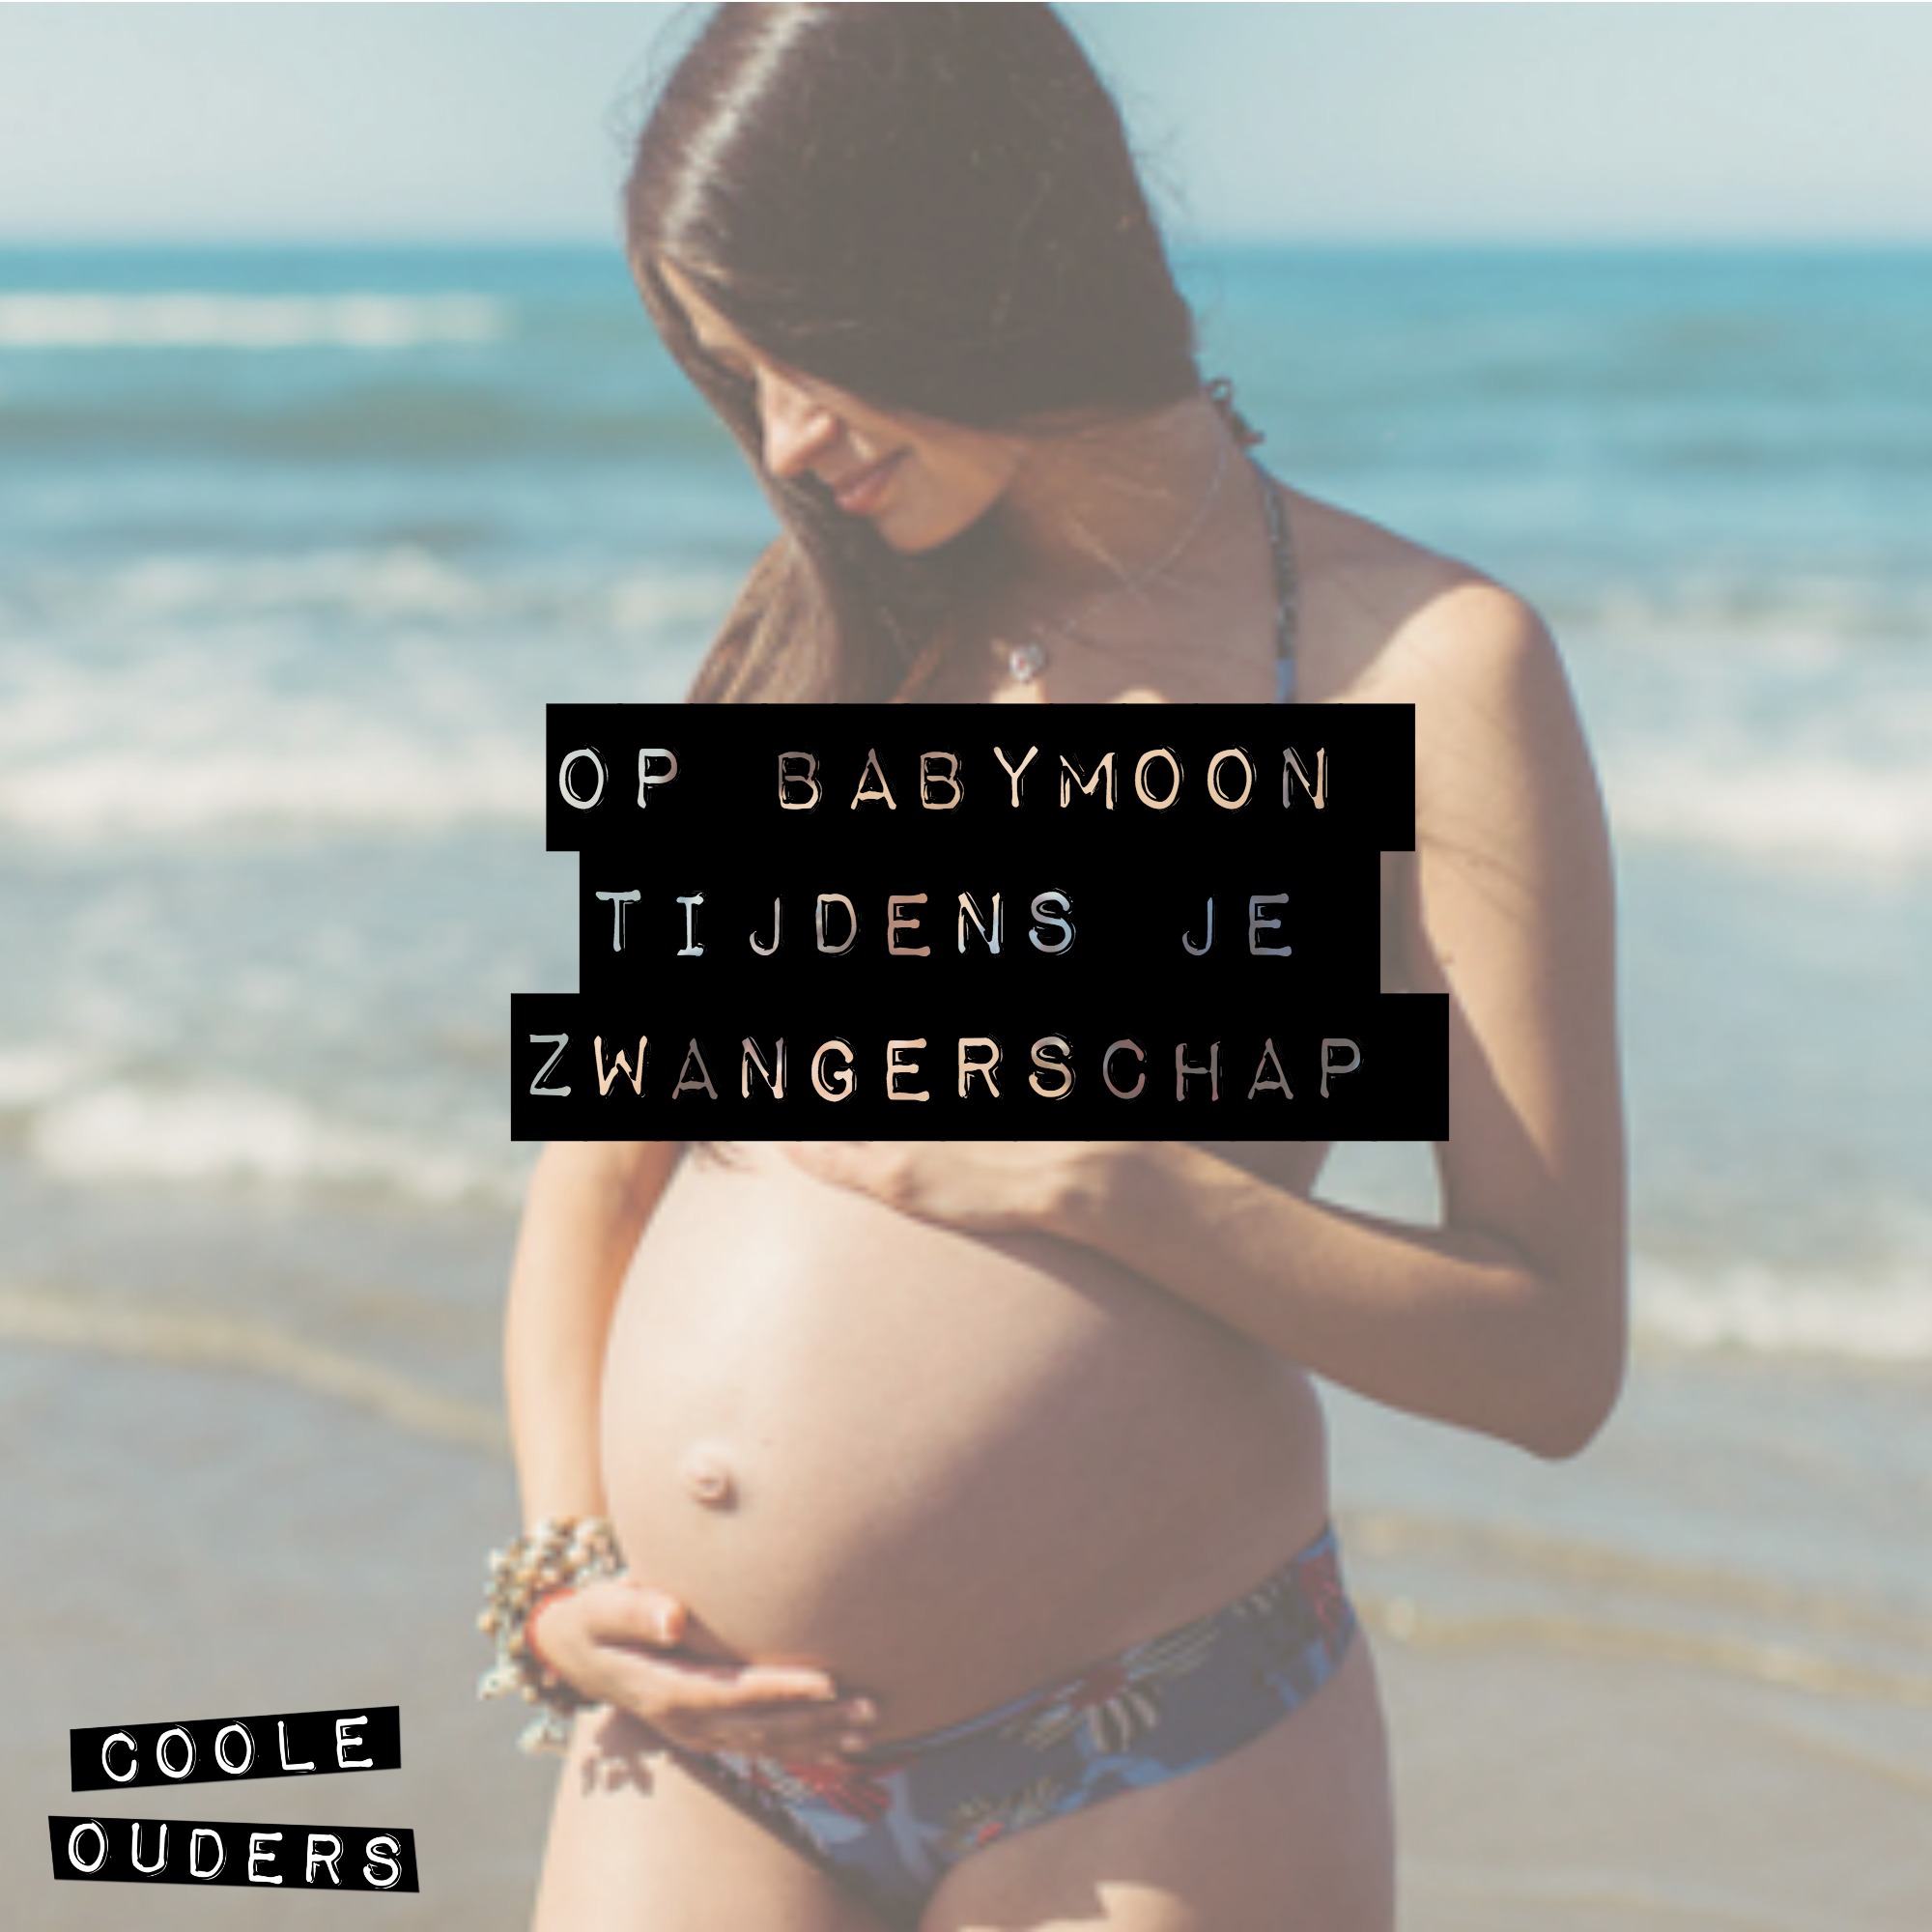 Op babymoon tijdens je zwangerschap – Tiny Thursday